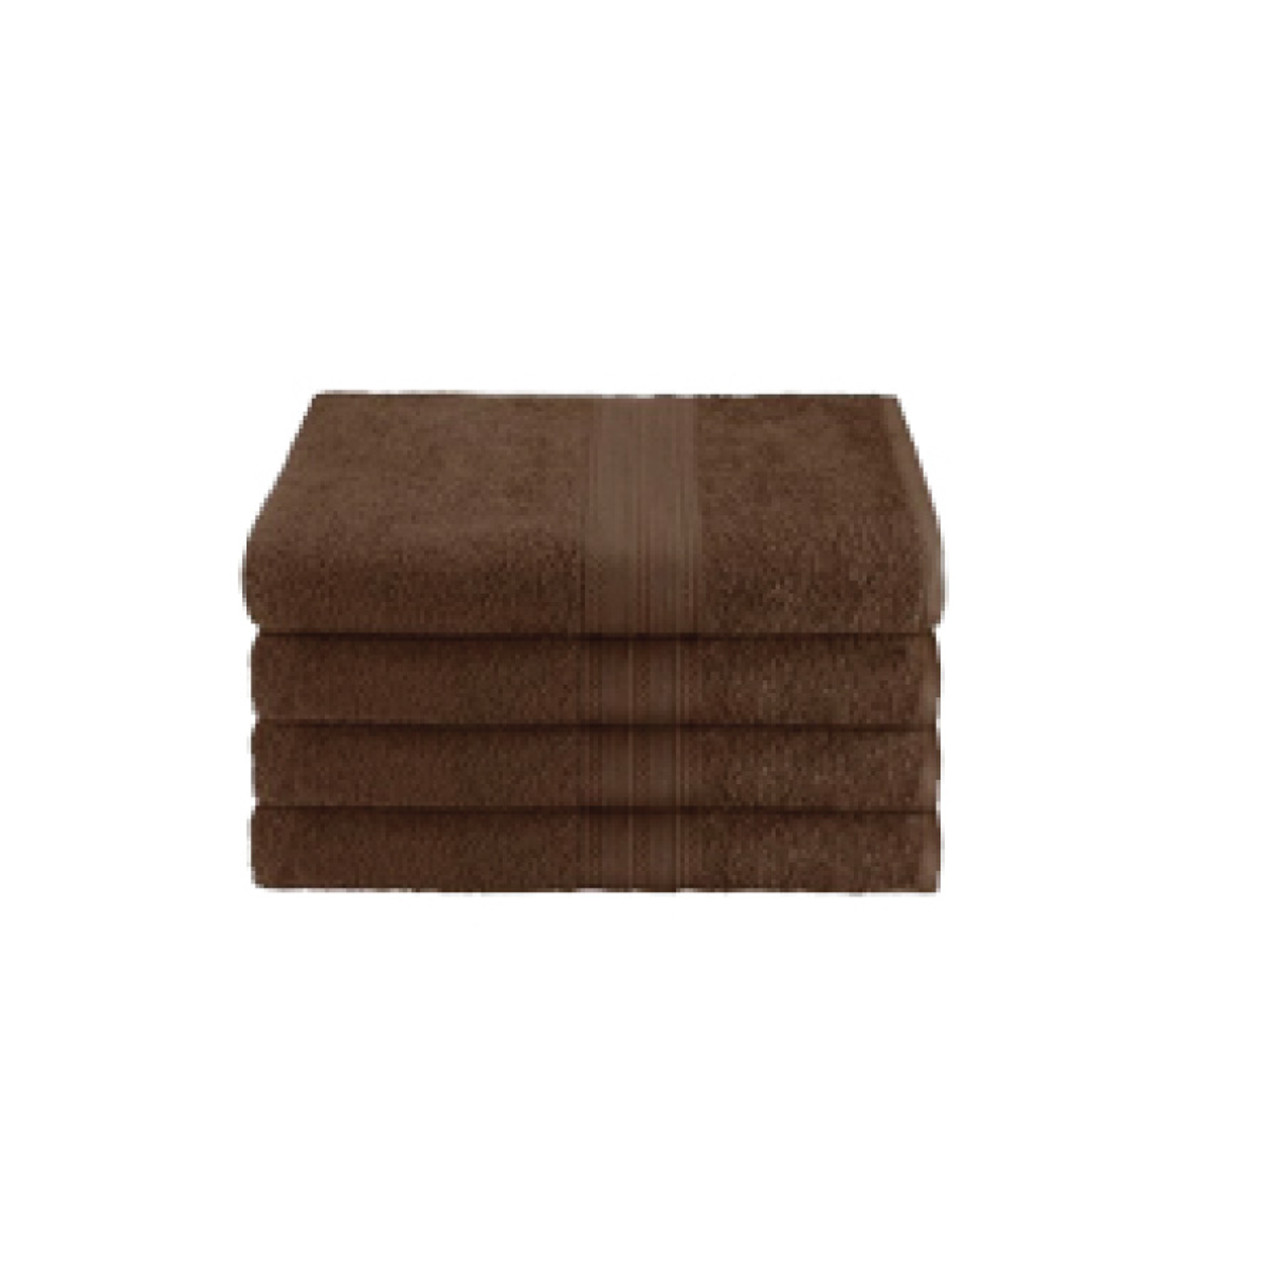 Bulk Premium Black Hand Towels, 16x27